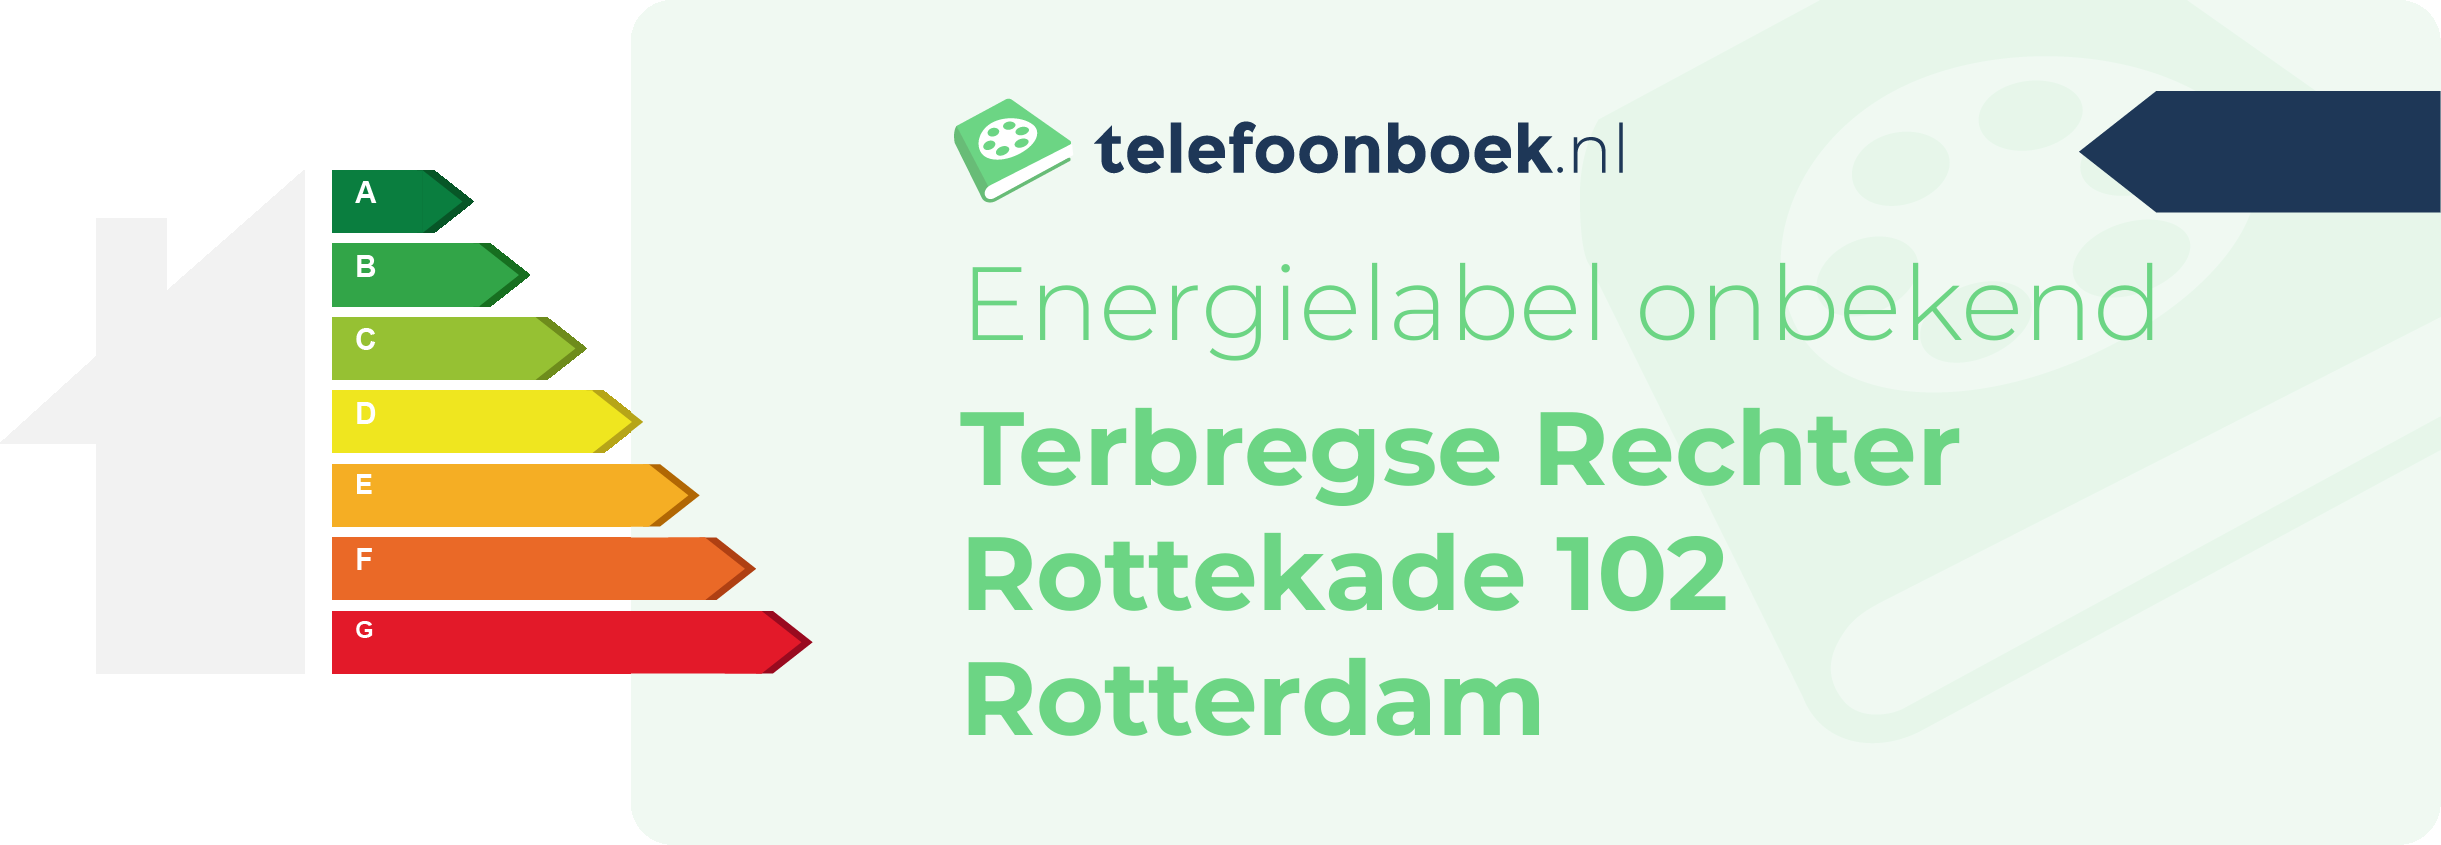 Energielabel Terbregse Rechter Rottekade 102 Rotterdam